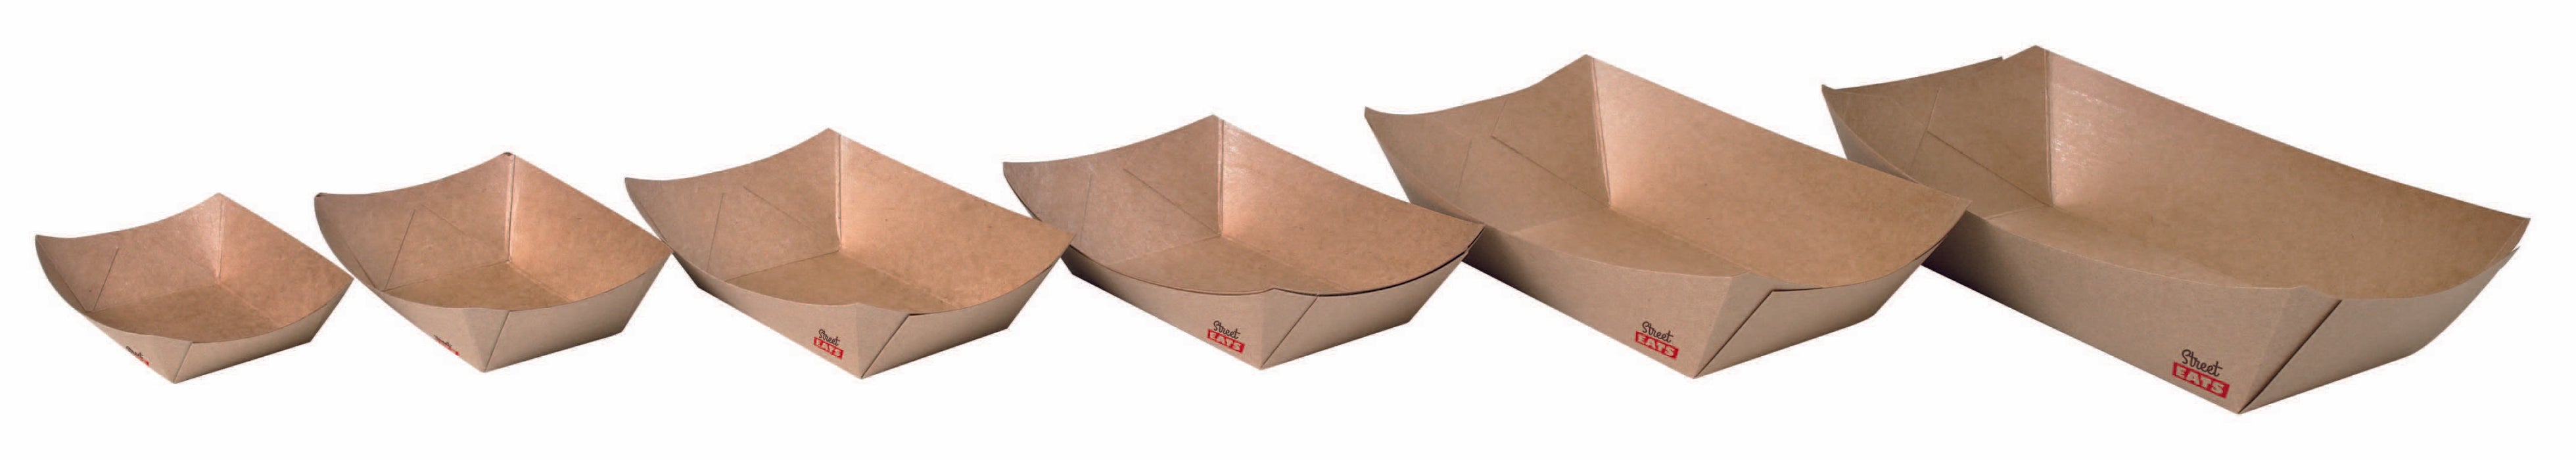 Multi Use Large Kraft Paper Boat -27oz L:8.6 X W:5.7 X H:1.4in 500 Pcs/Cs